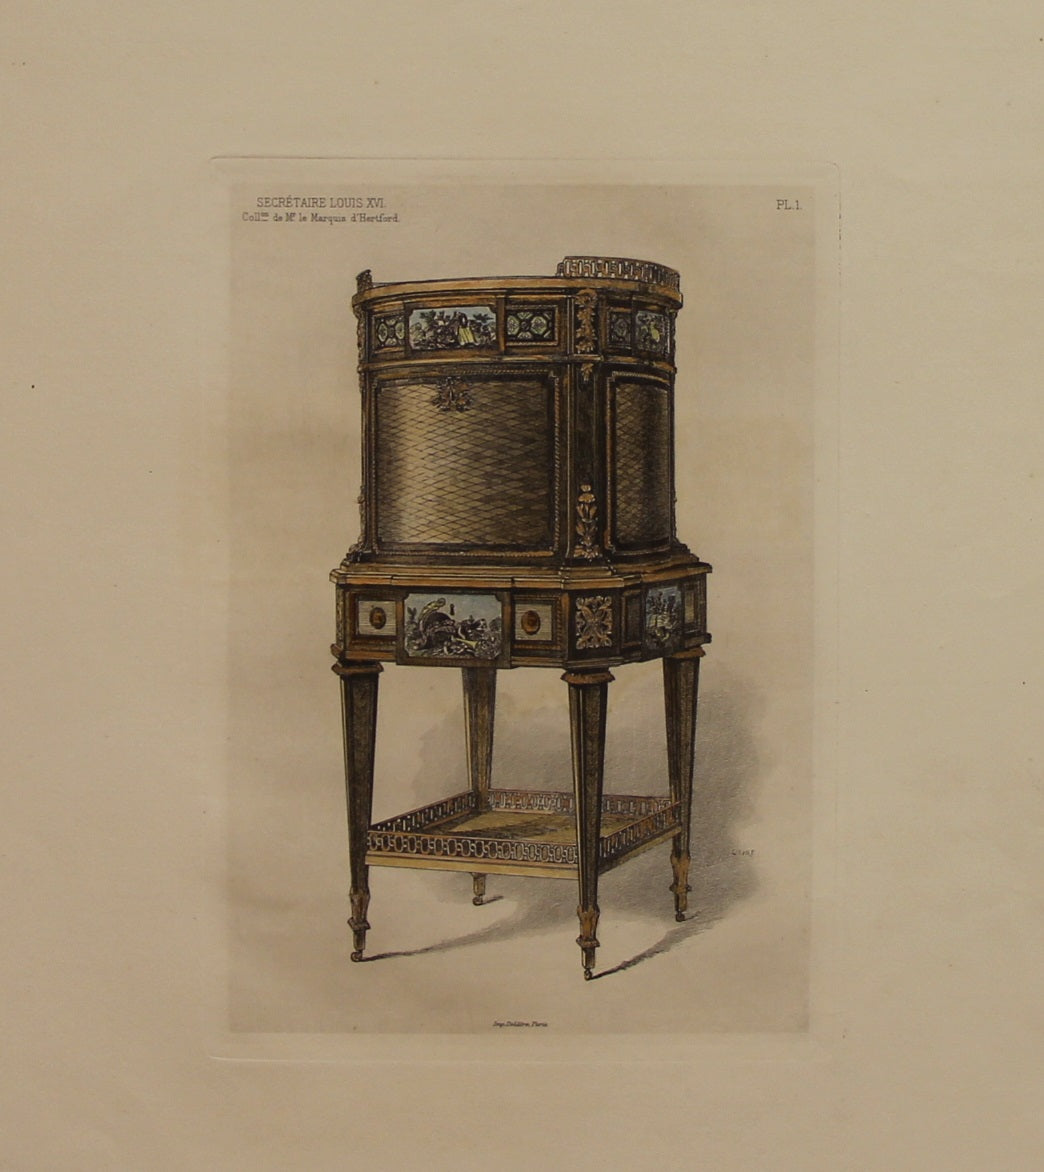 Decorator, Furniture, Les Collections, Celebres, D'Oeuvres D'Art, Secretaire Louis, XVI, From the Collection De M le Marquis d'Hertford, Plate 1, 1864